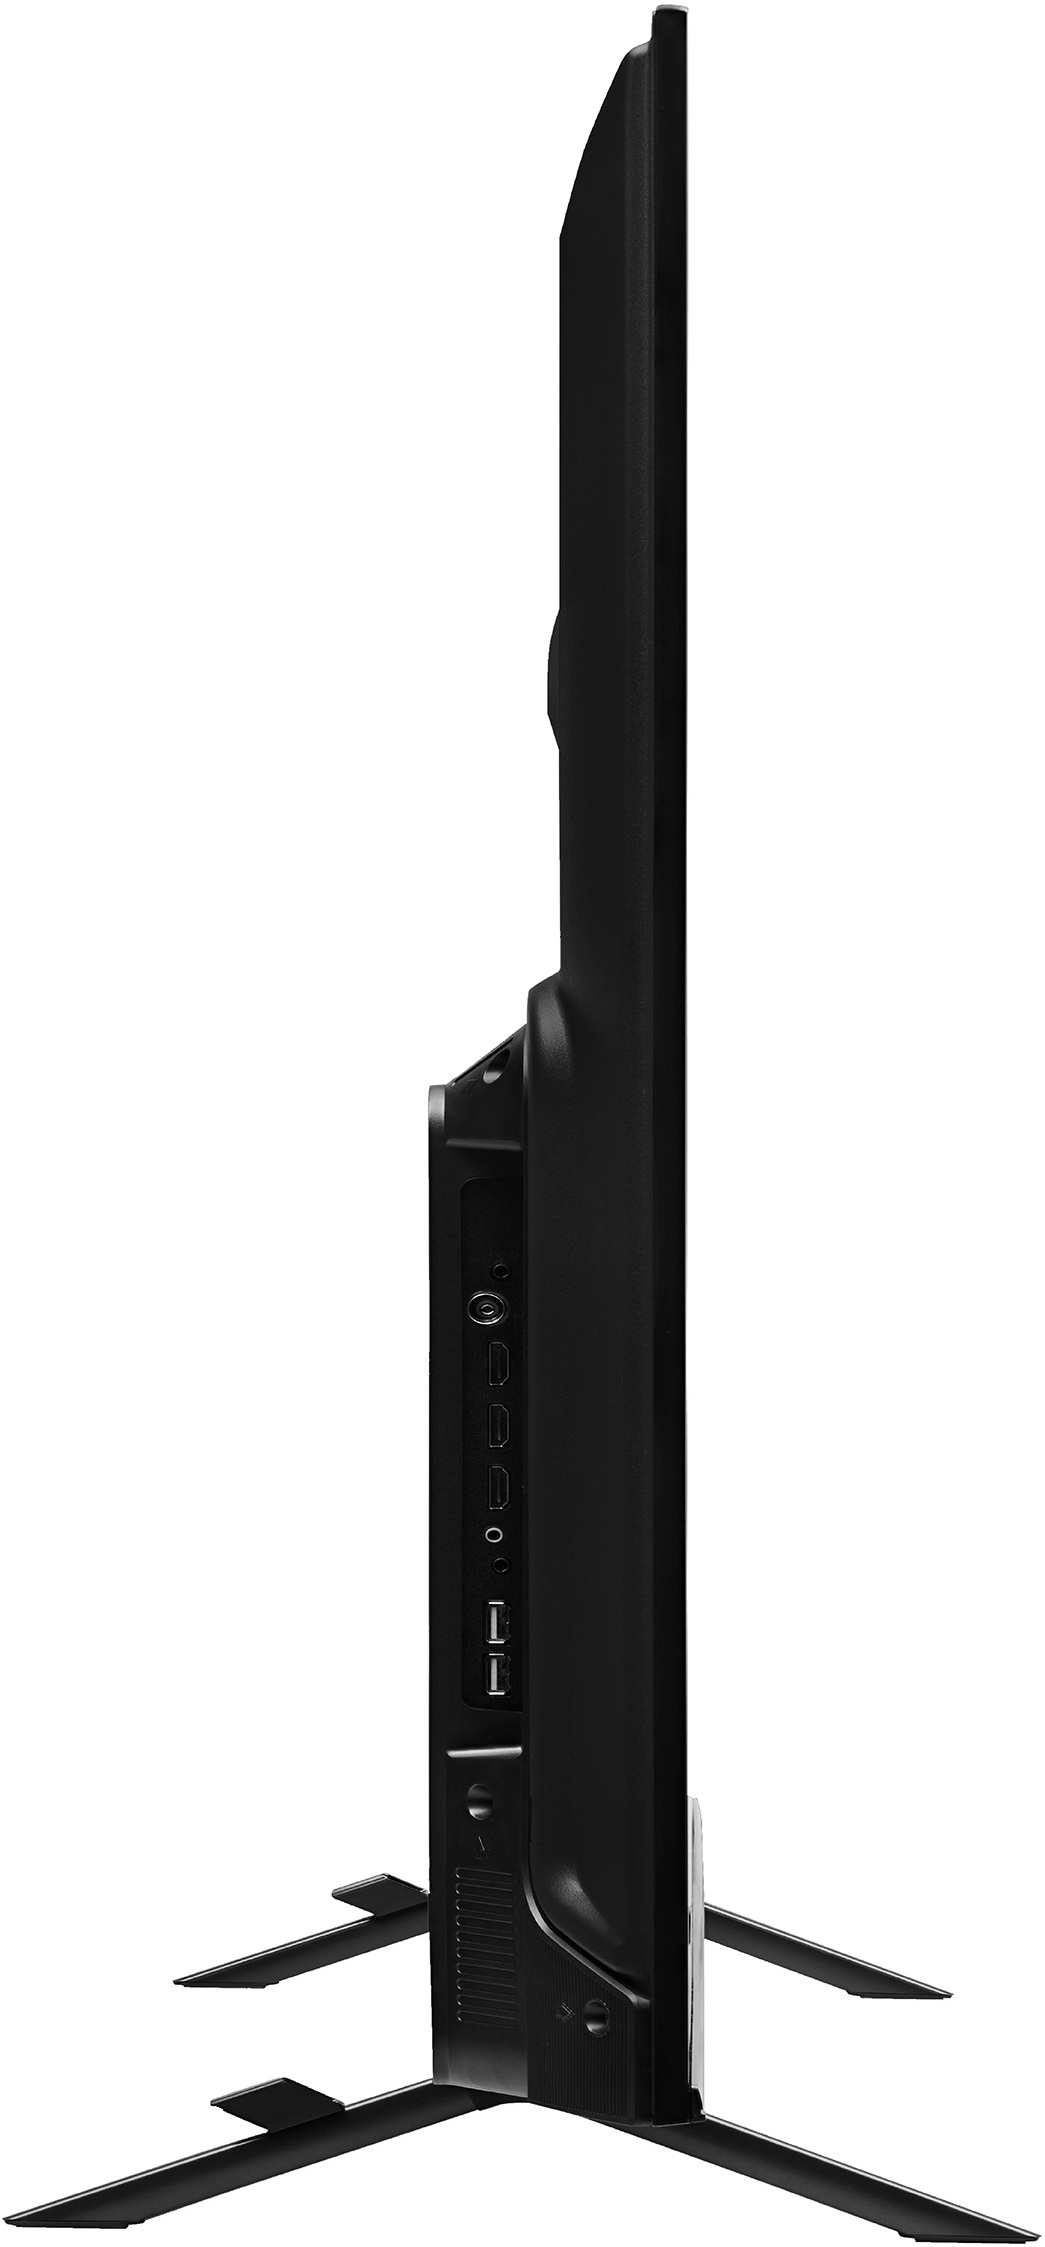 Vu  GloLED (55 inch) Ultra HD (4K)Glo Panel (55GloLED)